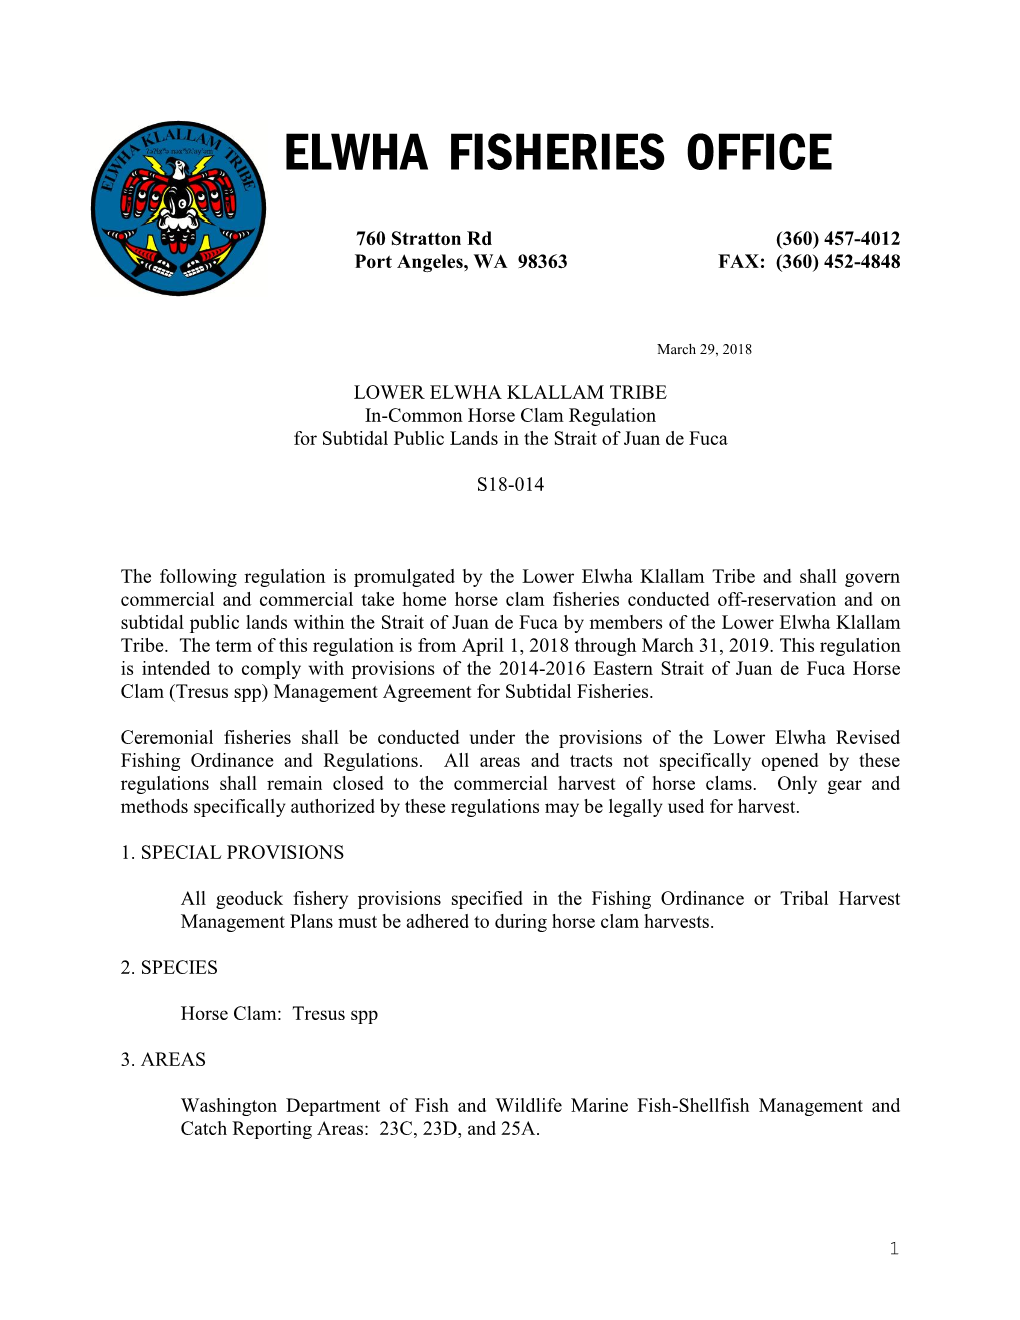 Elwha Fisheries Office